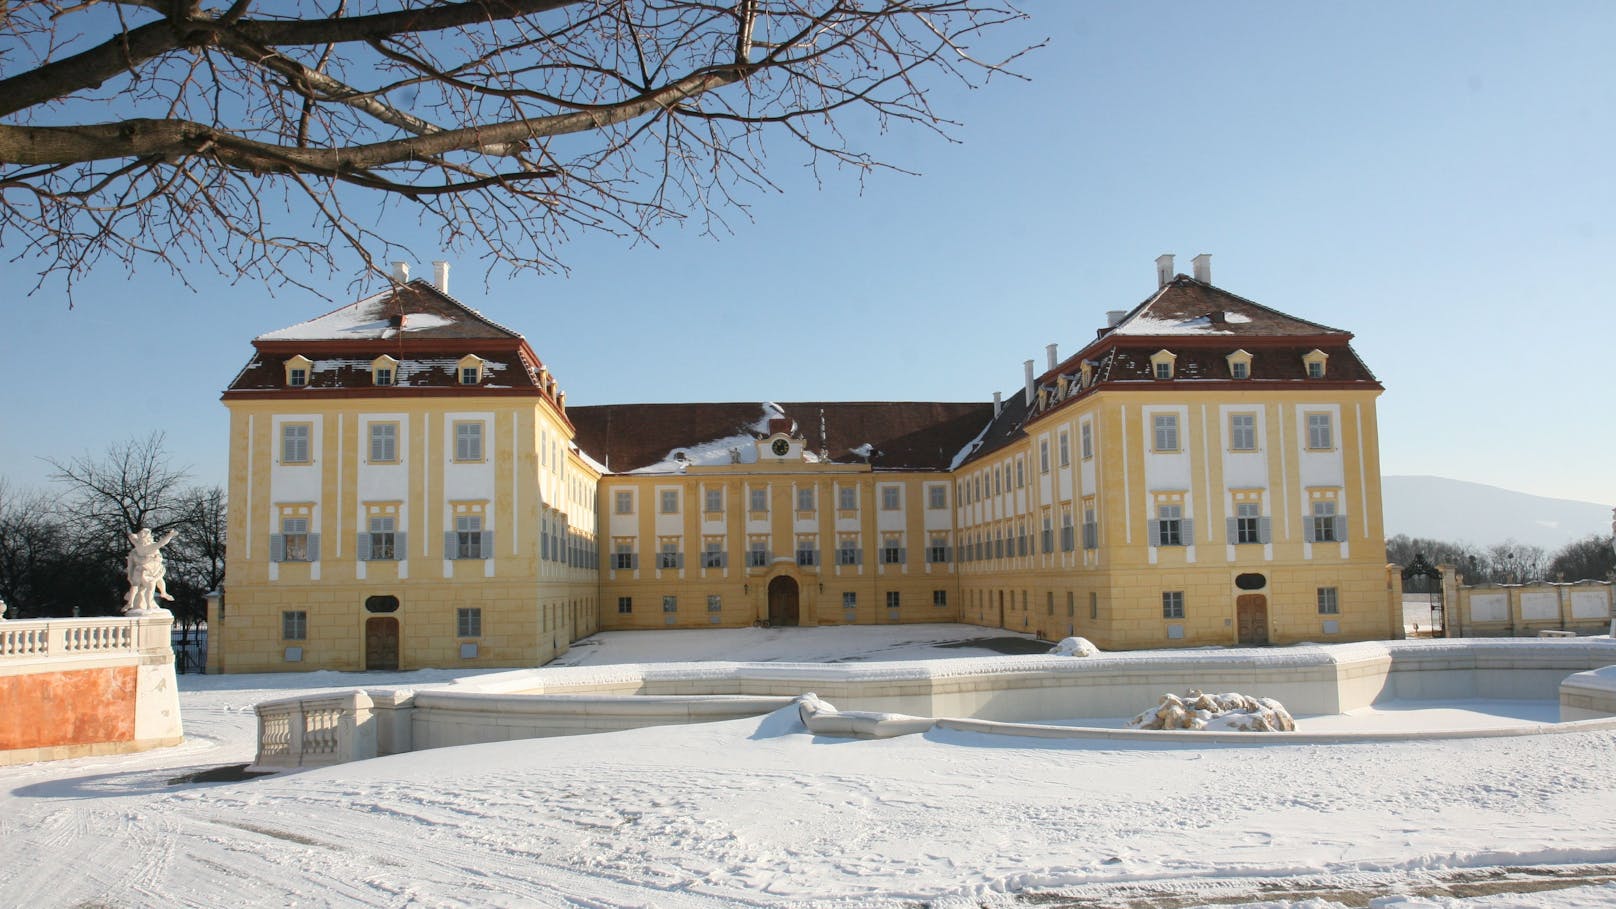 Wintererlebnis auf Schloss Hof!